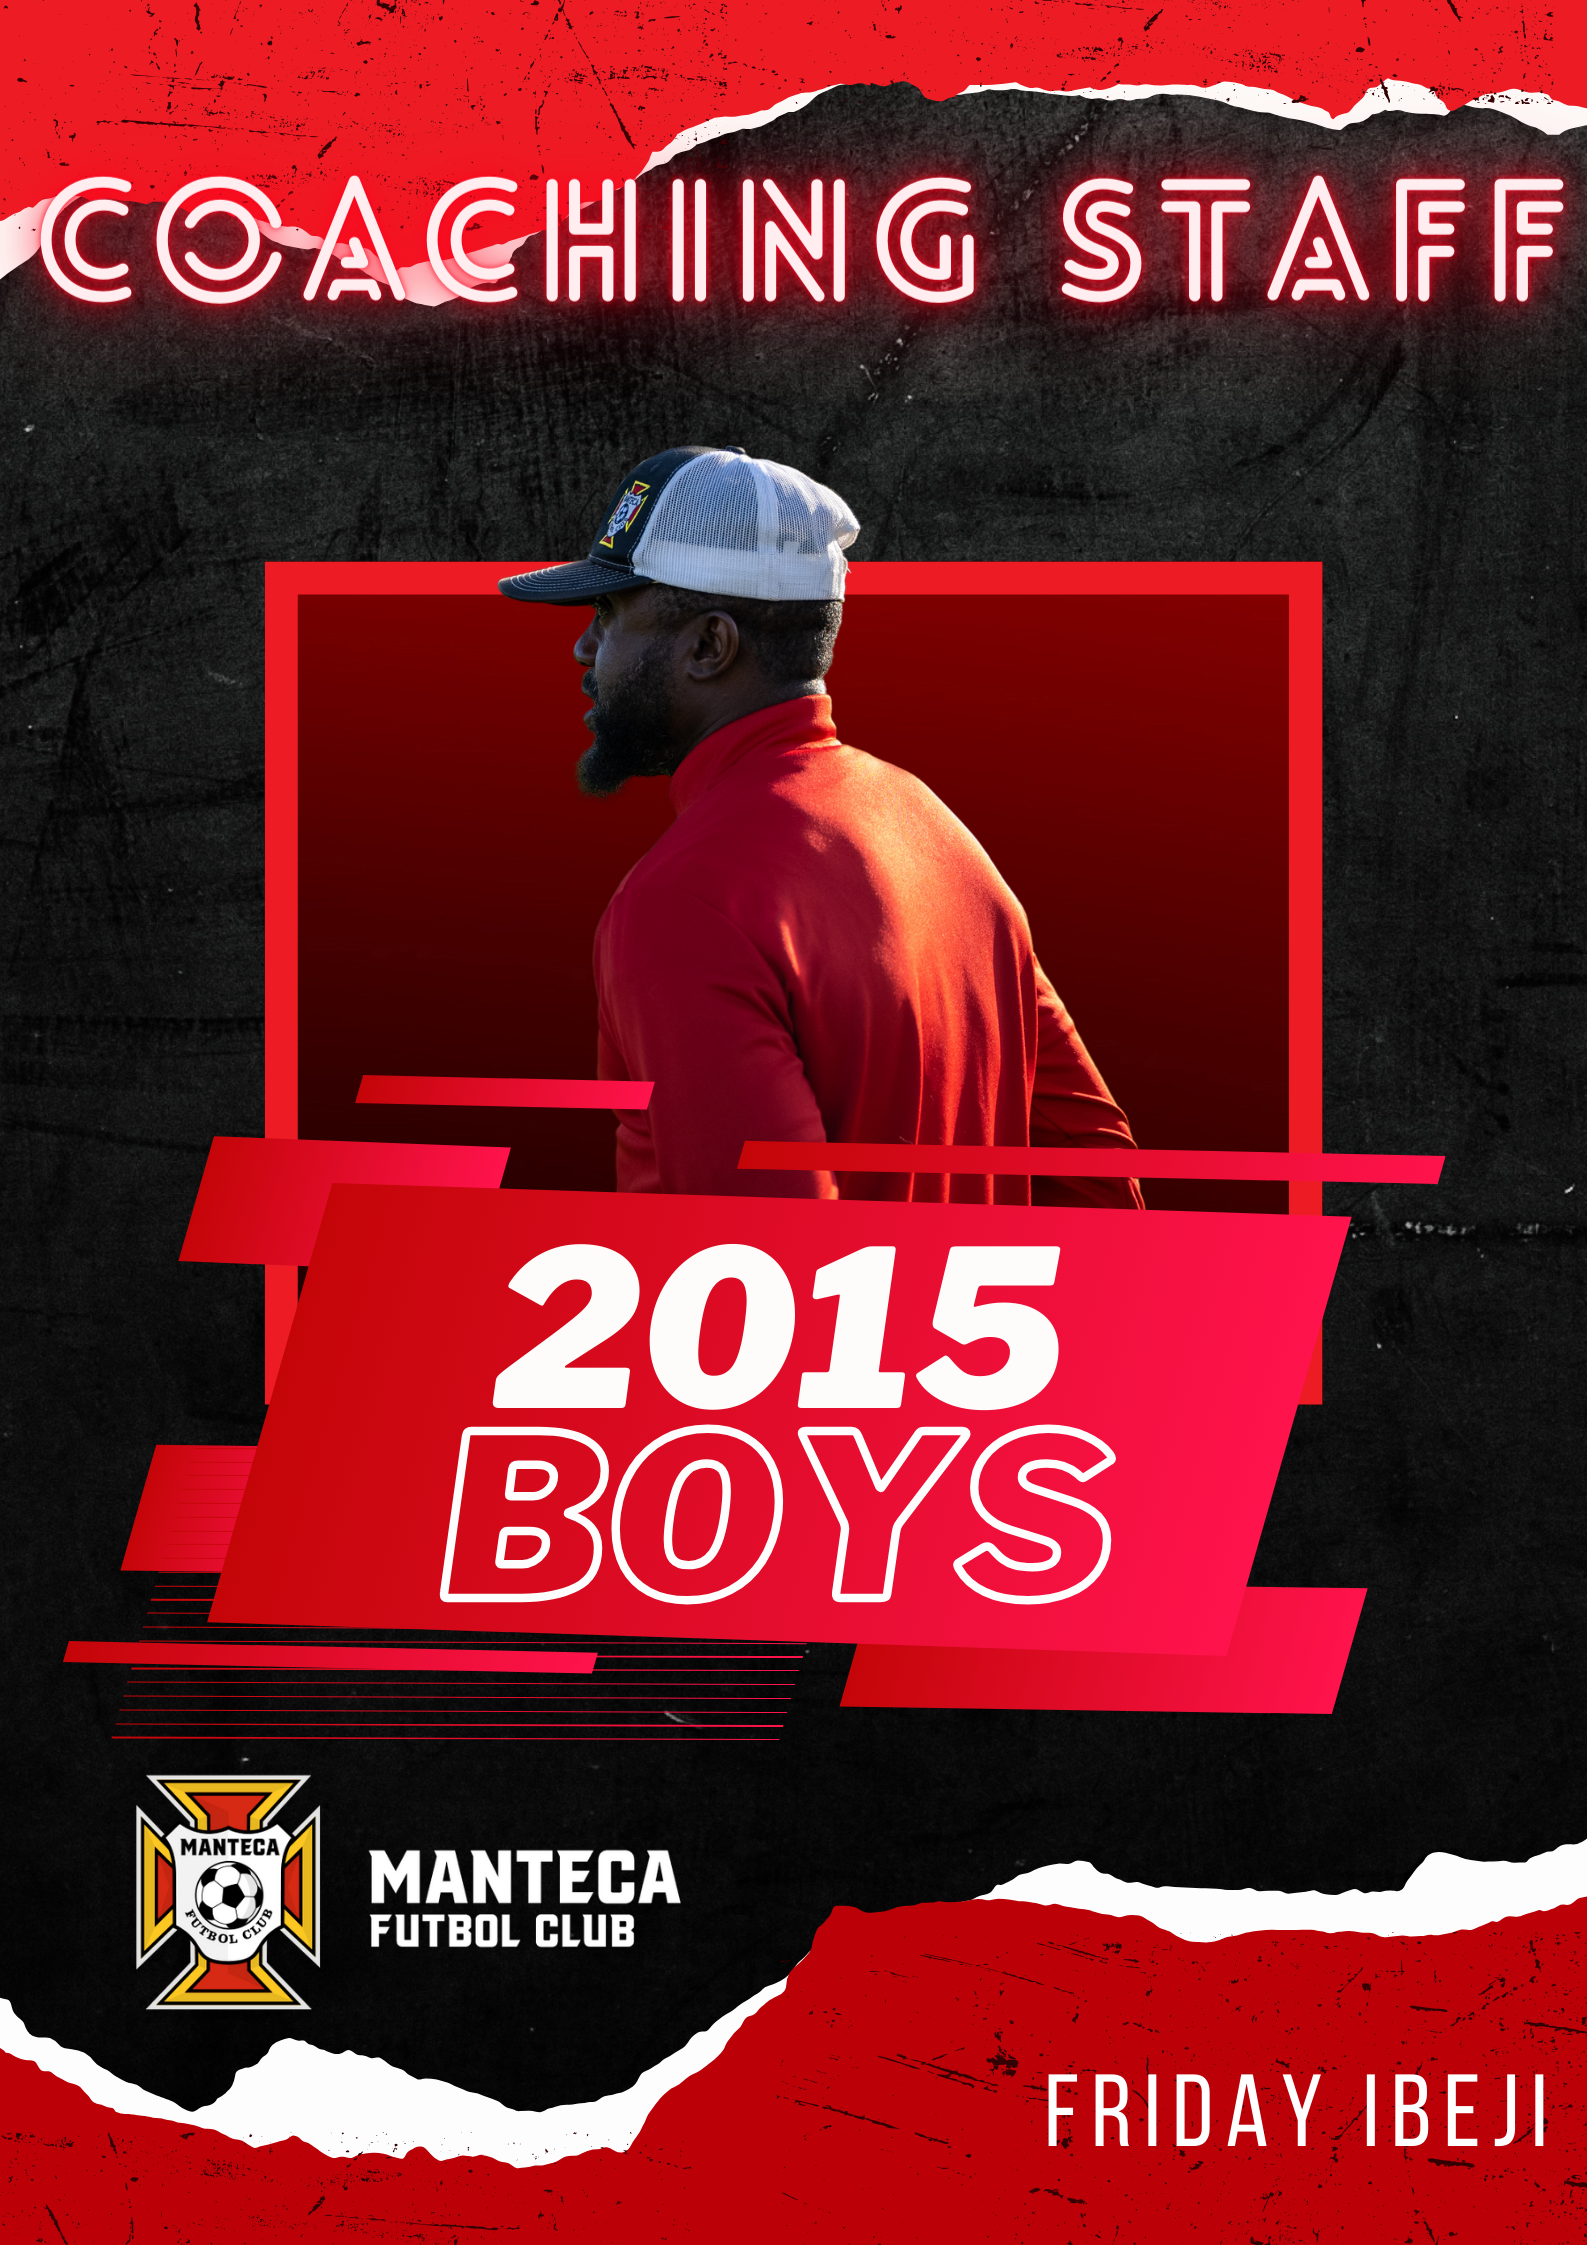 Manteca Futbol Club 2015 Boys